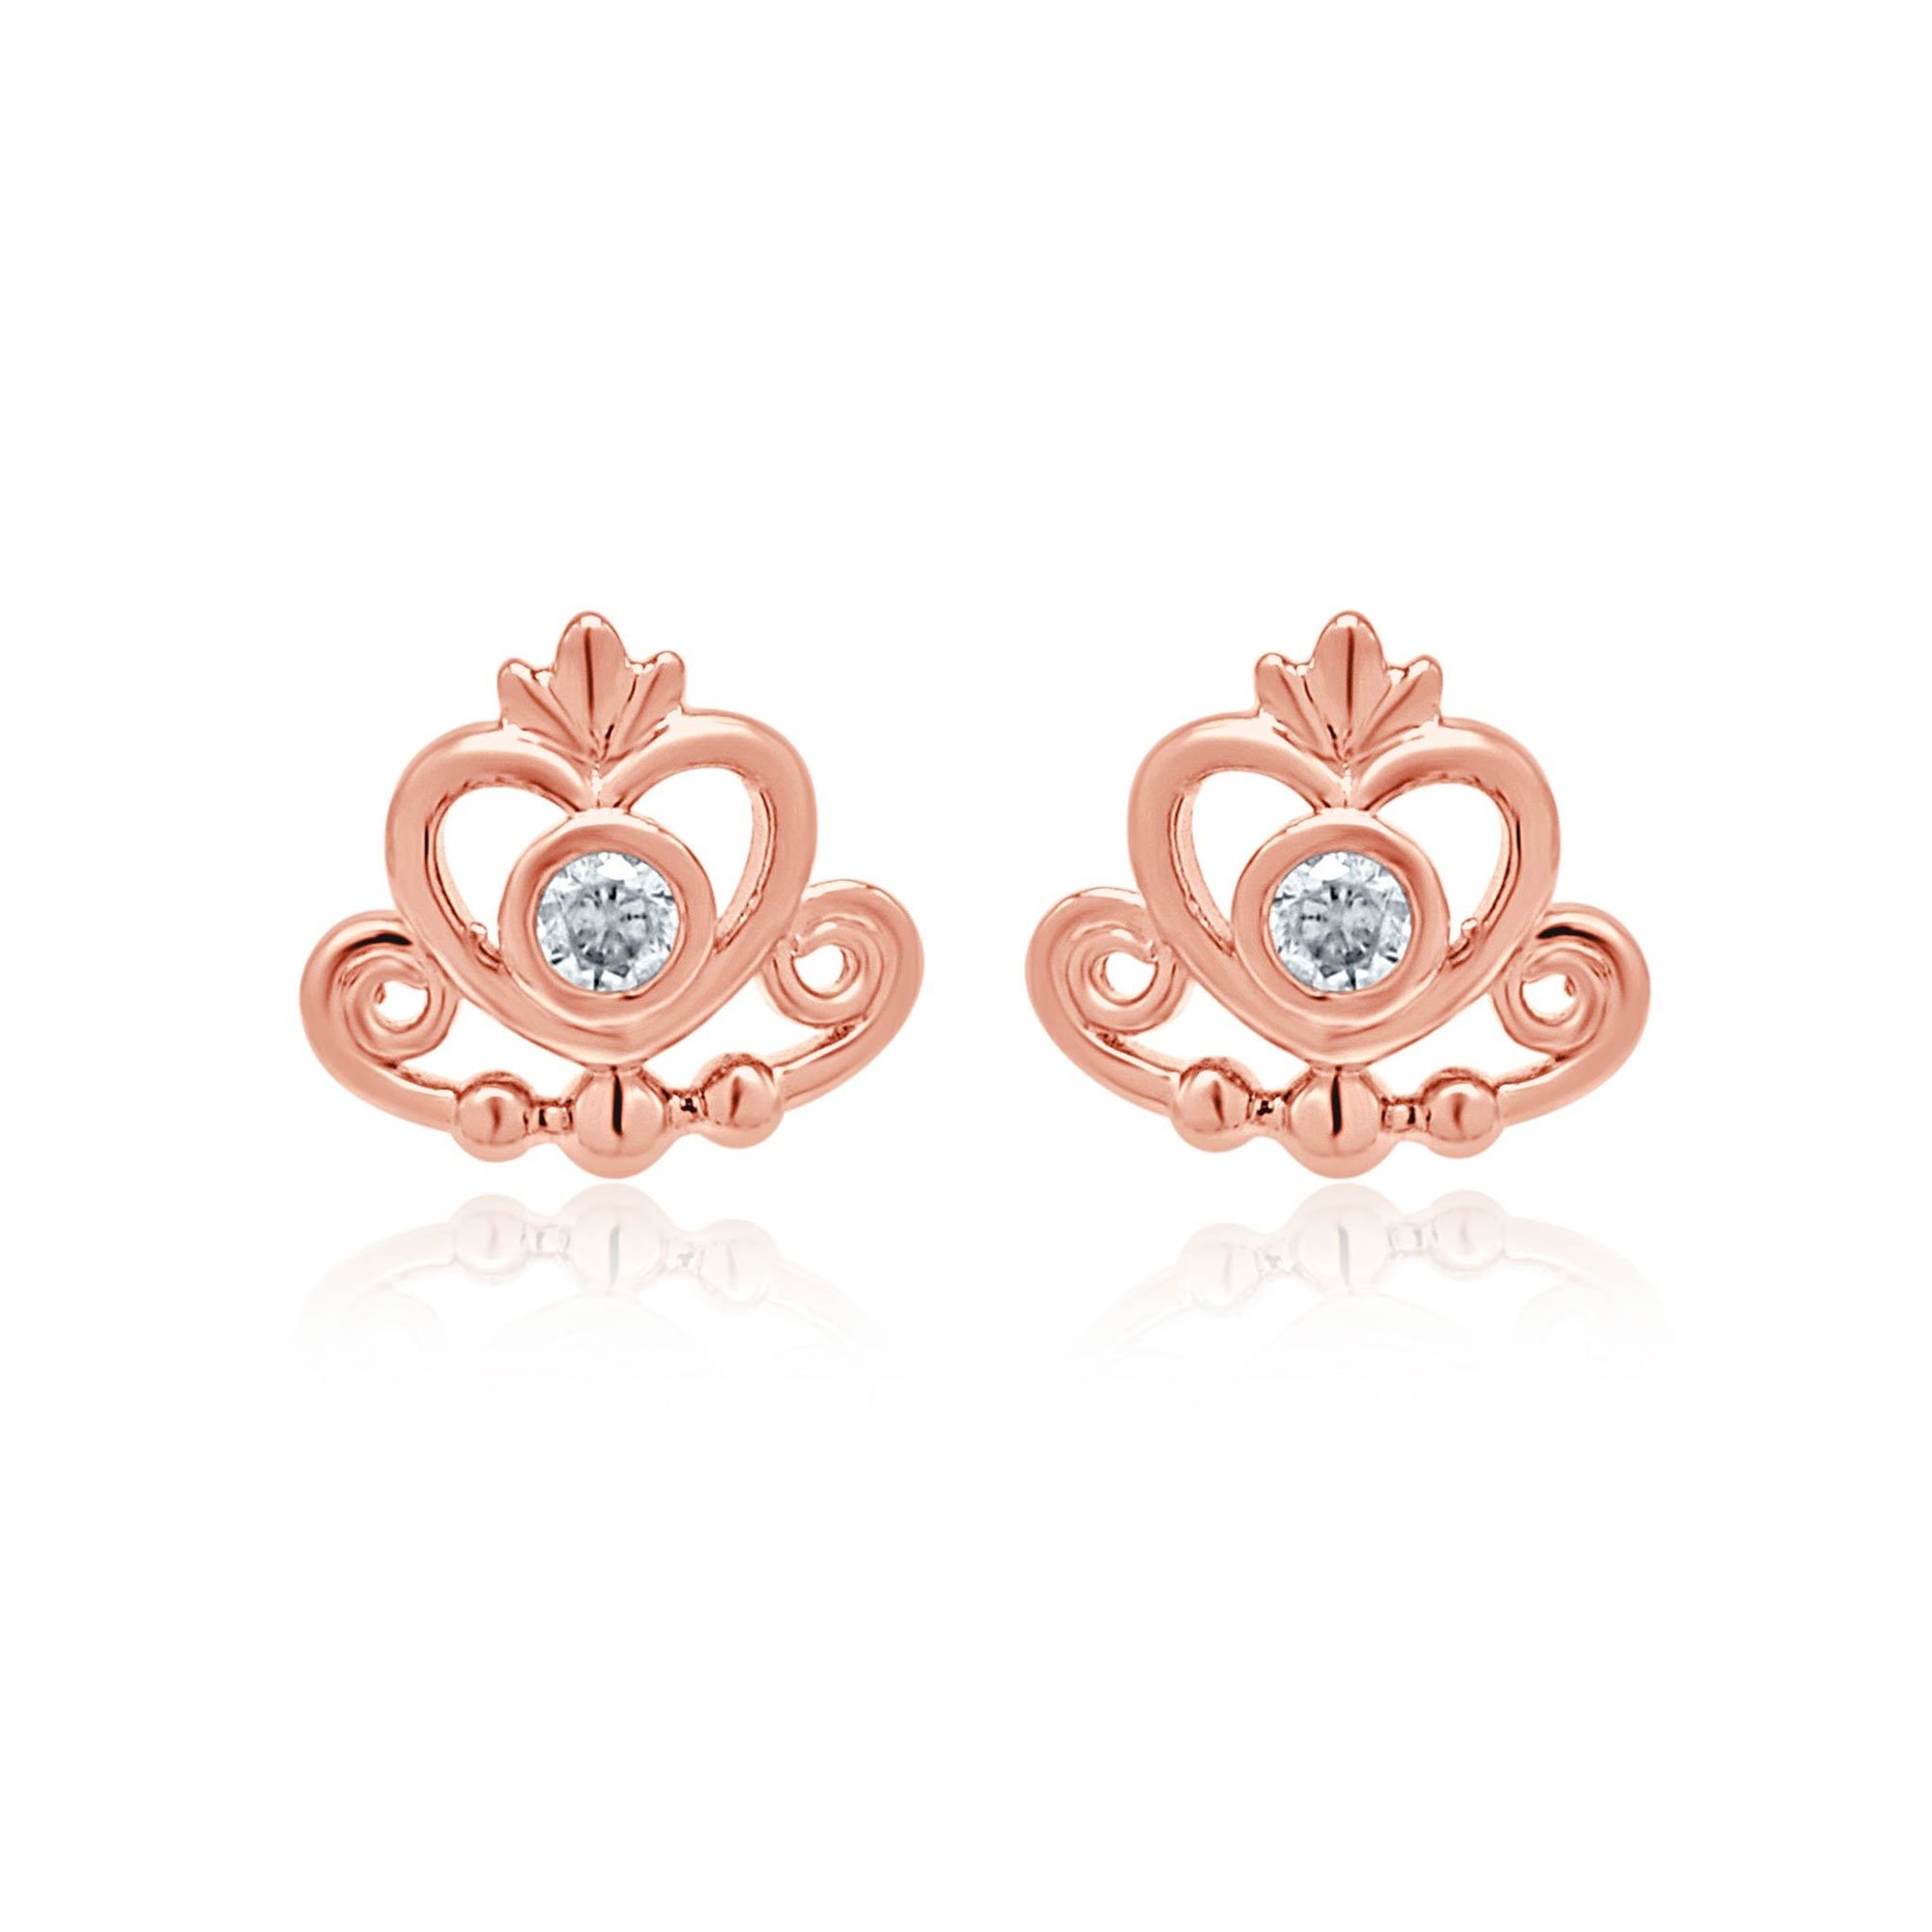 Rianna regal rose gold tiara earrings-DEMI+CO Jewellery